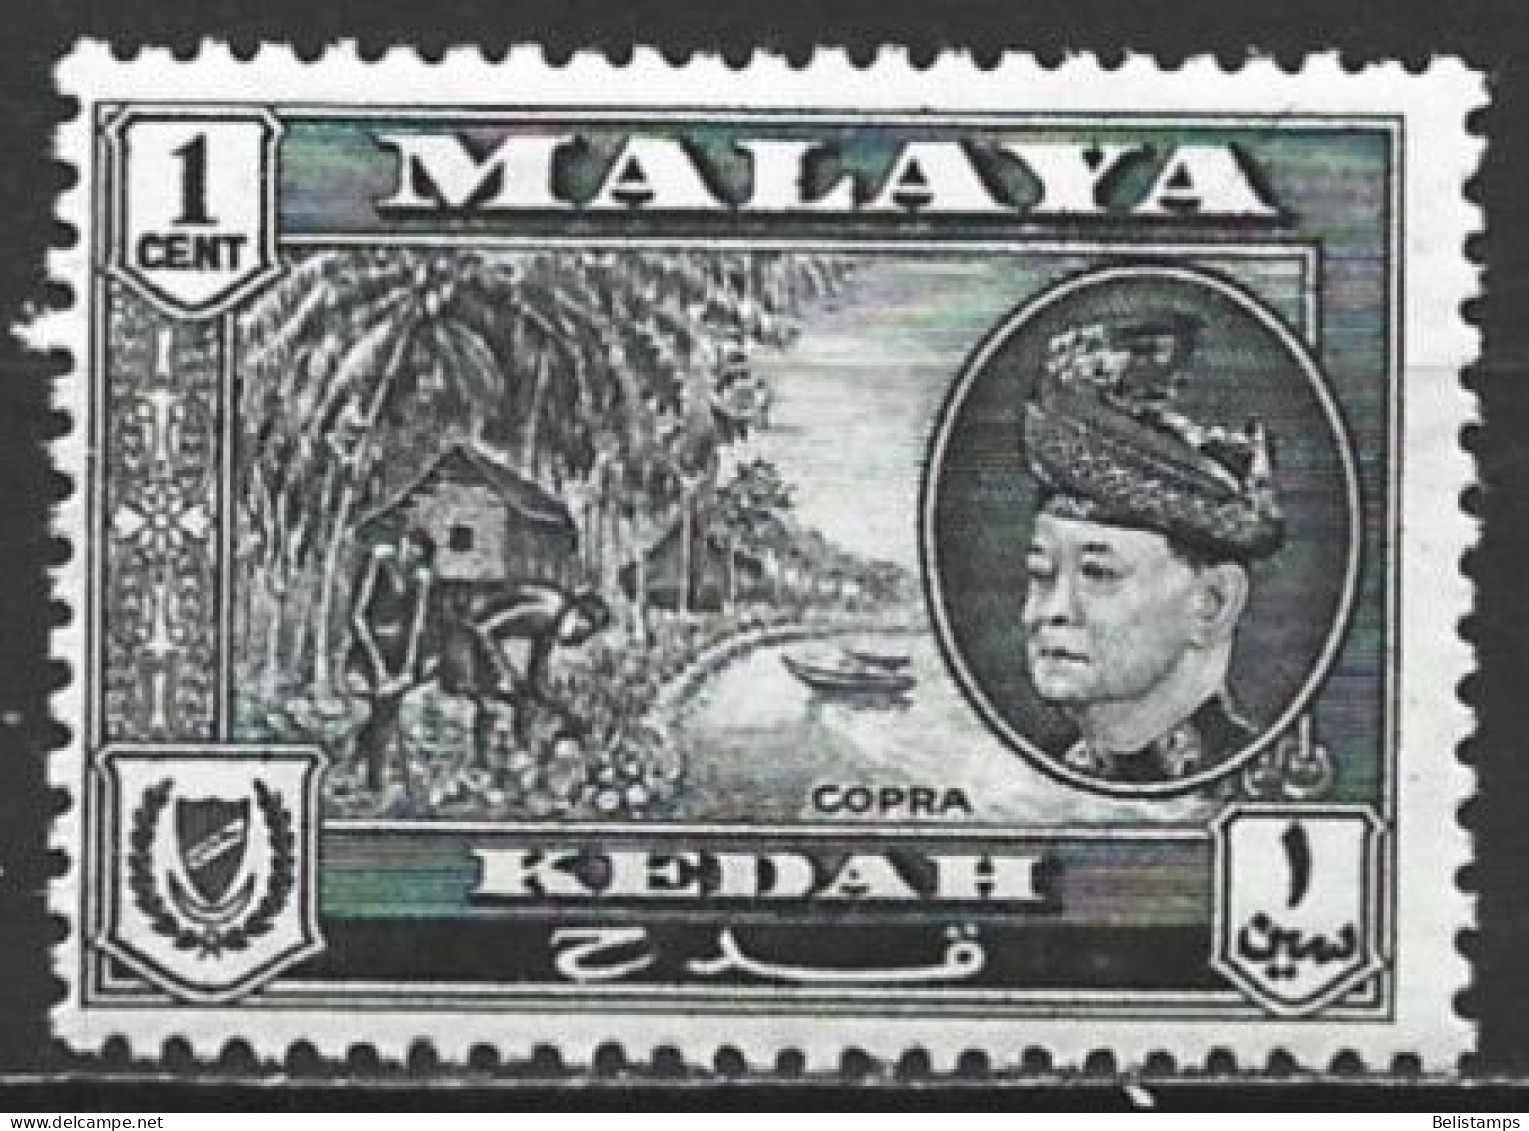 Malaya - Kedah 1957. Scott #83 (MH) Sultan Tungku Badlishah And Copra - Kedah